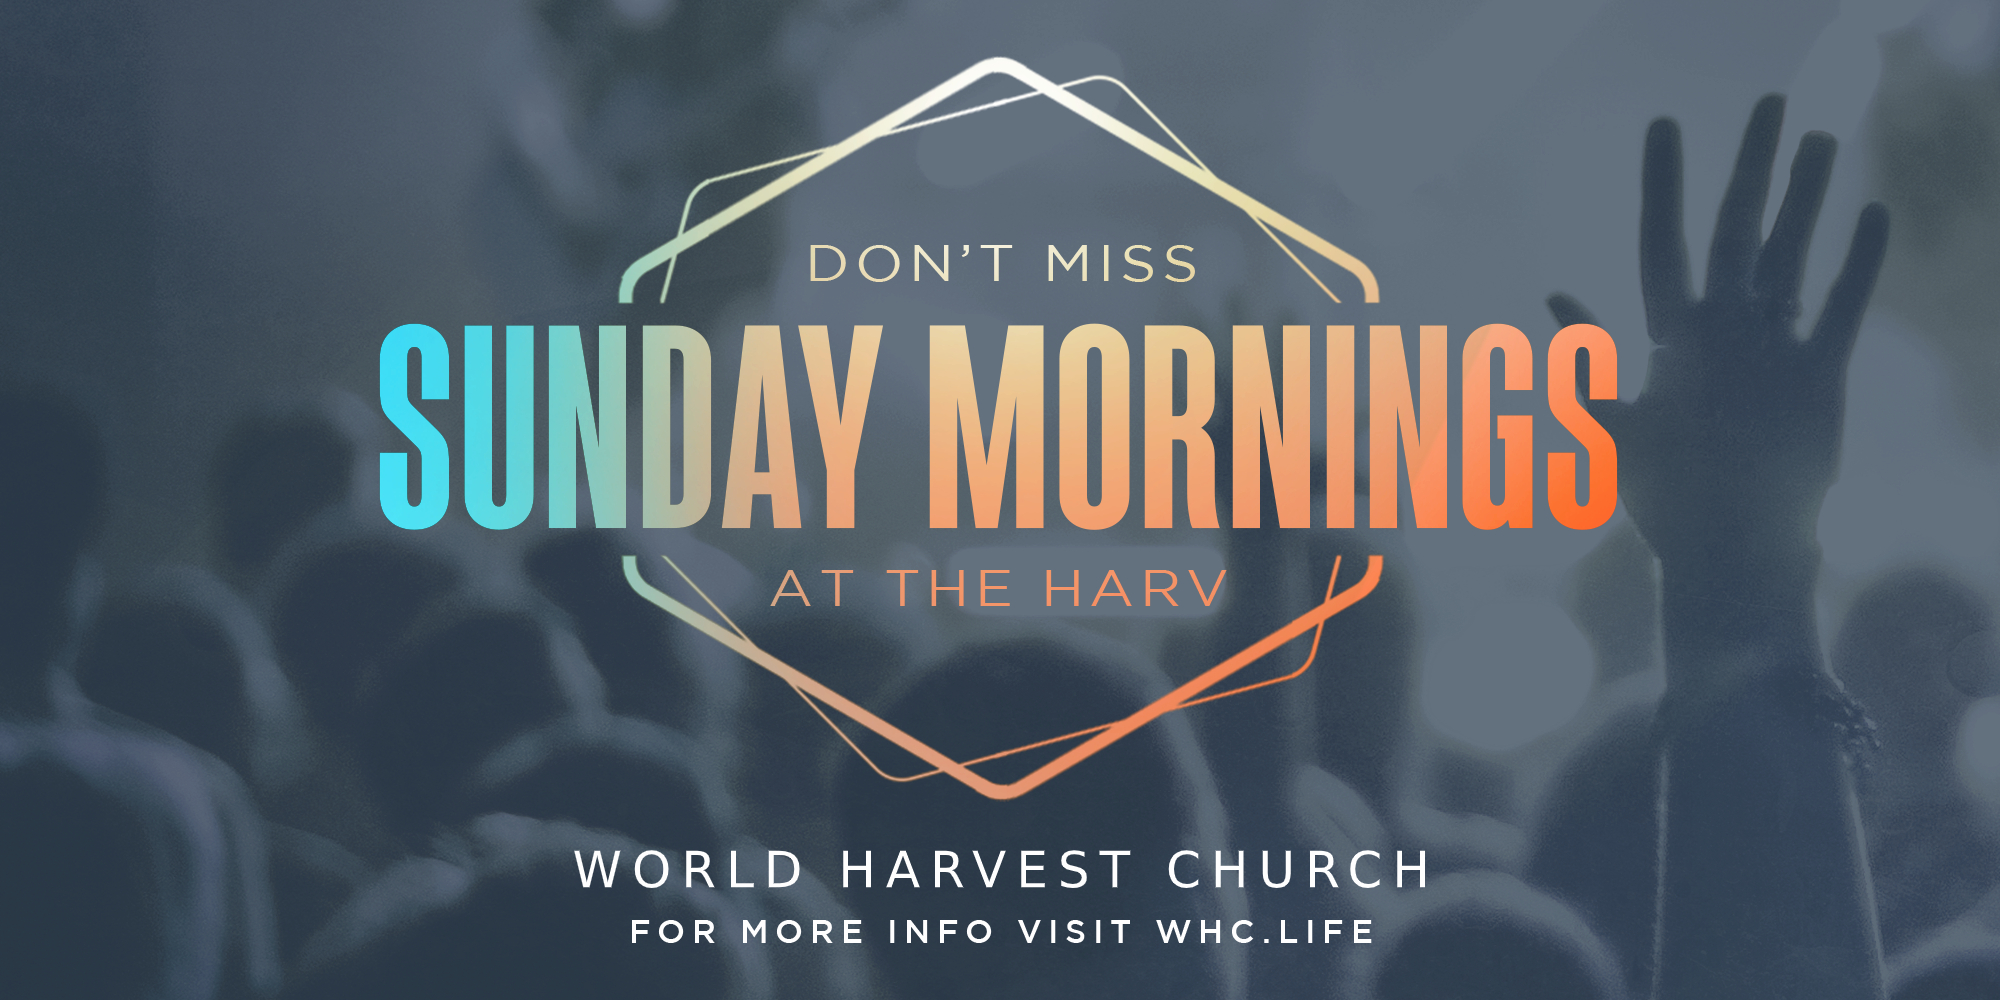 Dont Miss Sunday Mornings at the Harv World Harvest Church For More Info Visit WHC.LIFE